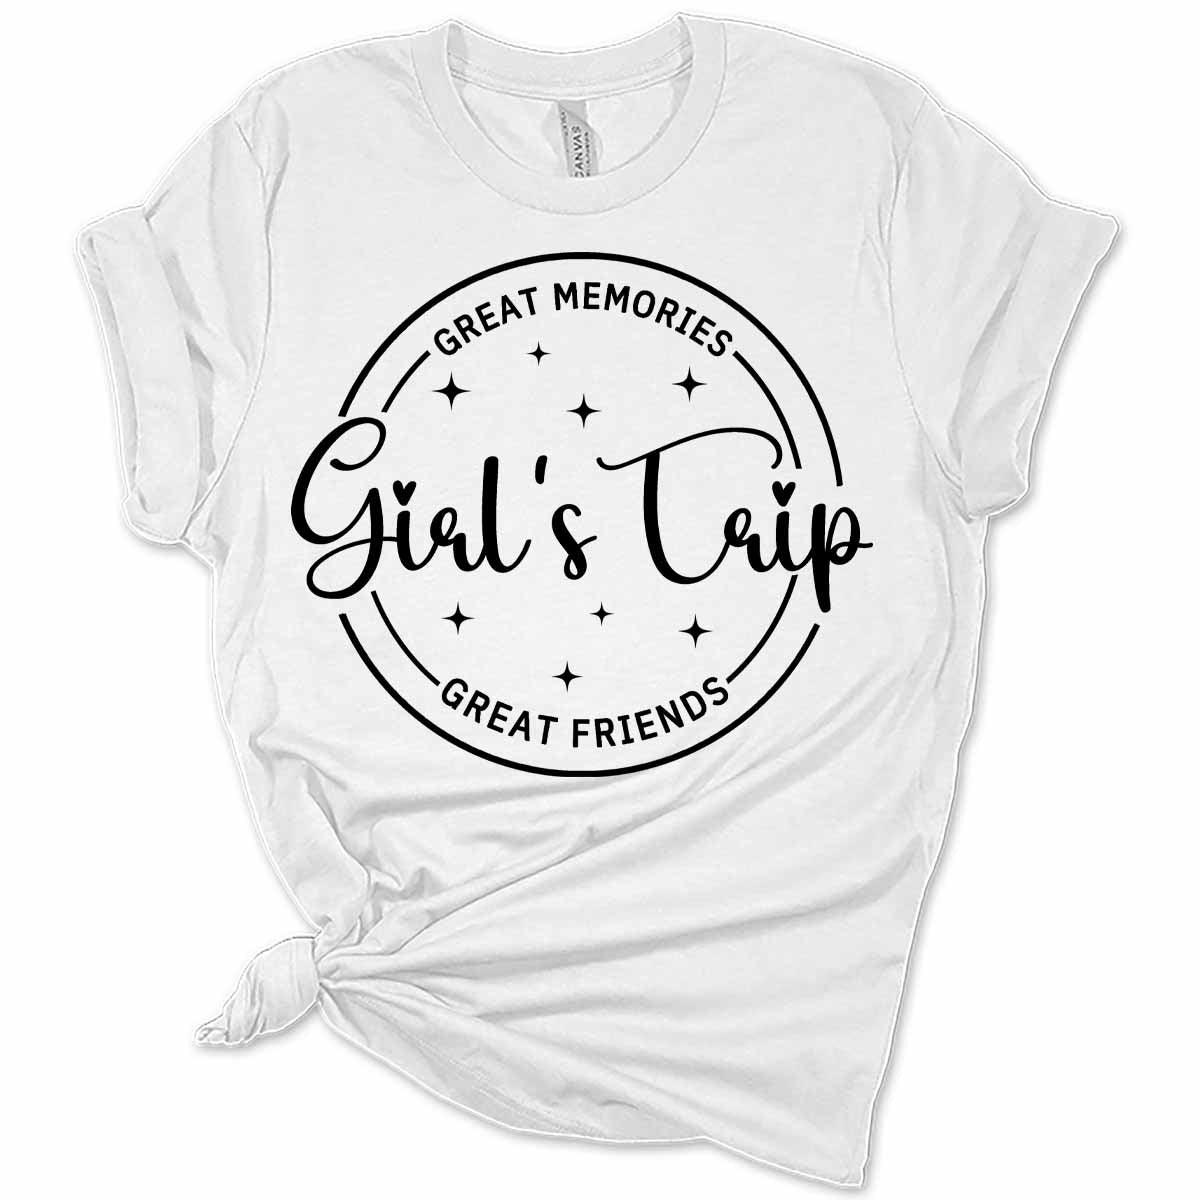 Girls Trip Graphic Shirt